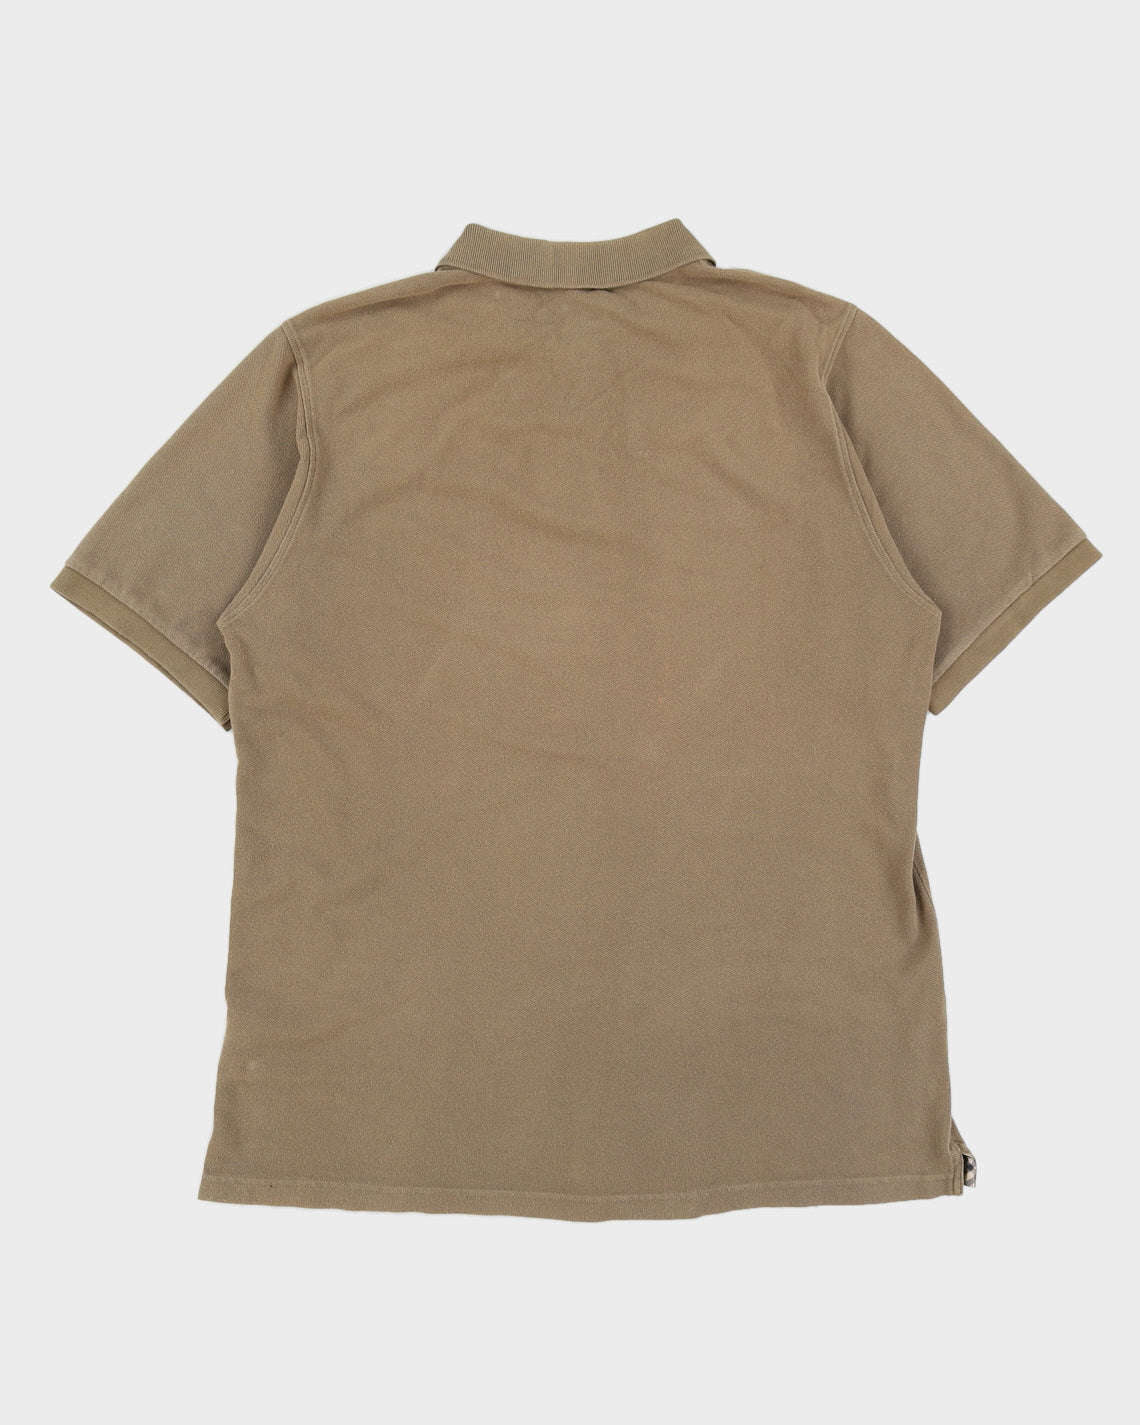 Burberry London Brown Polo Shirt - XL